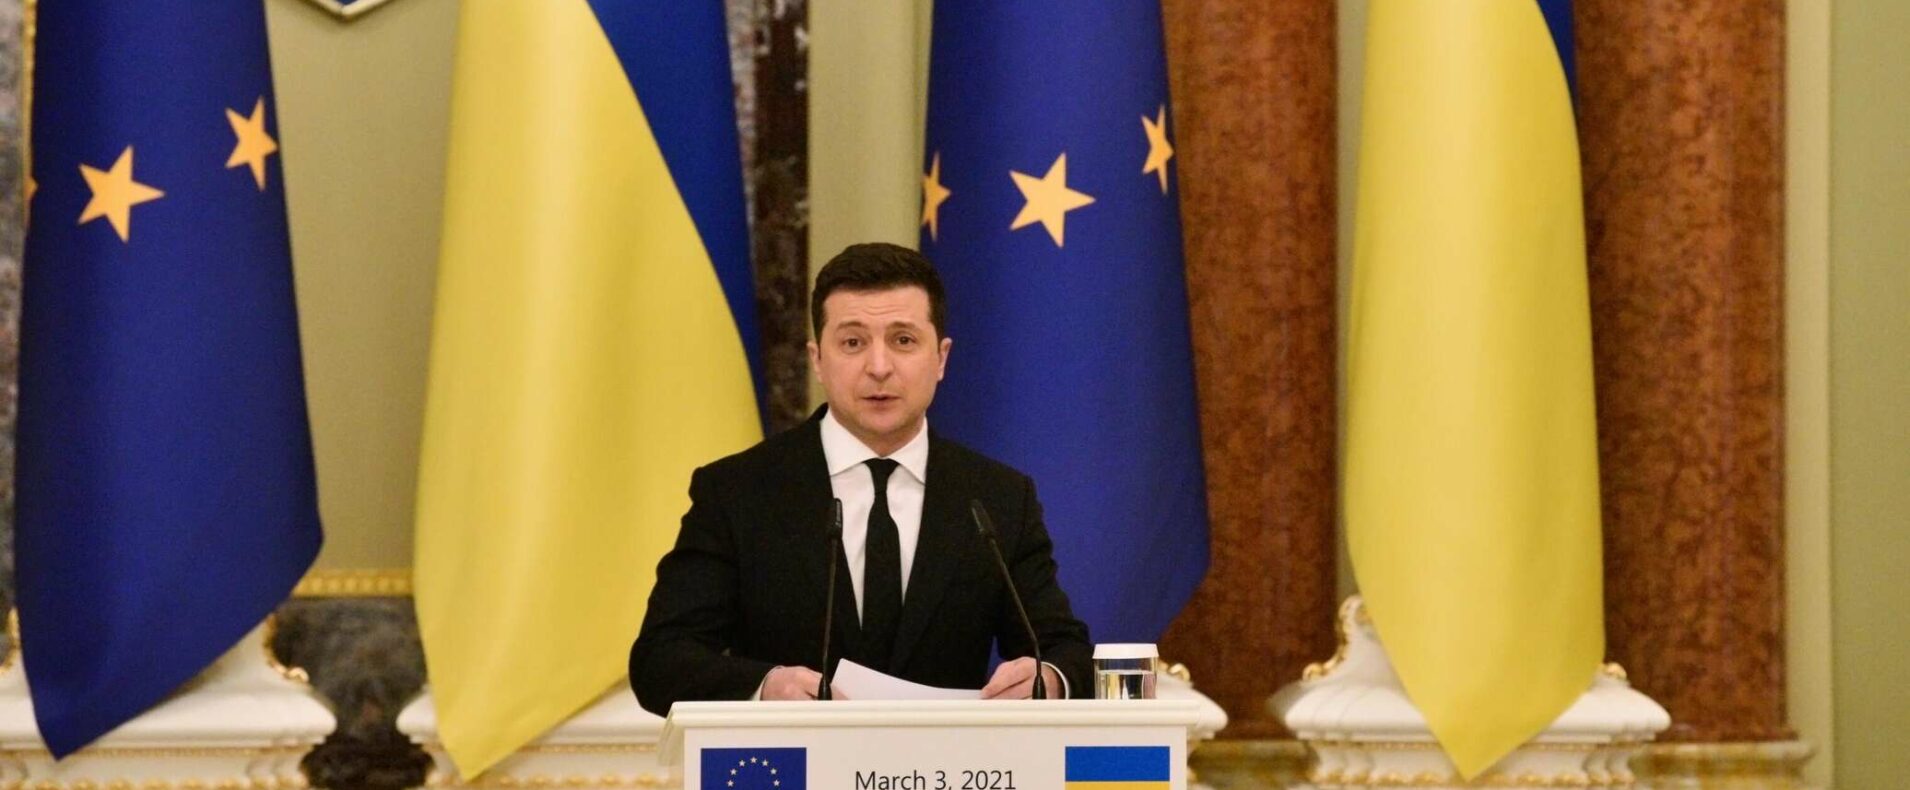 Претендент украины. Молдова кандидат ЕС.